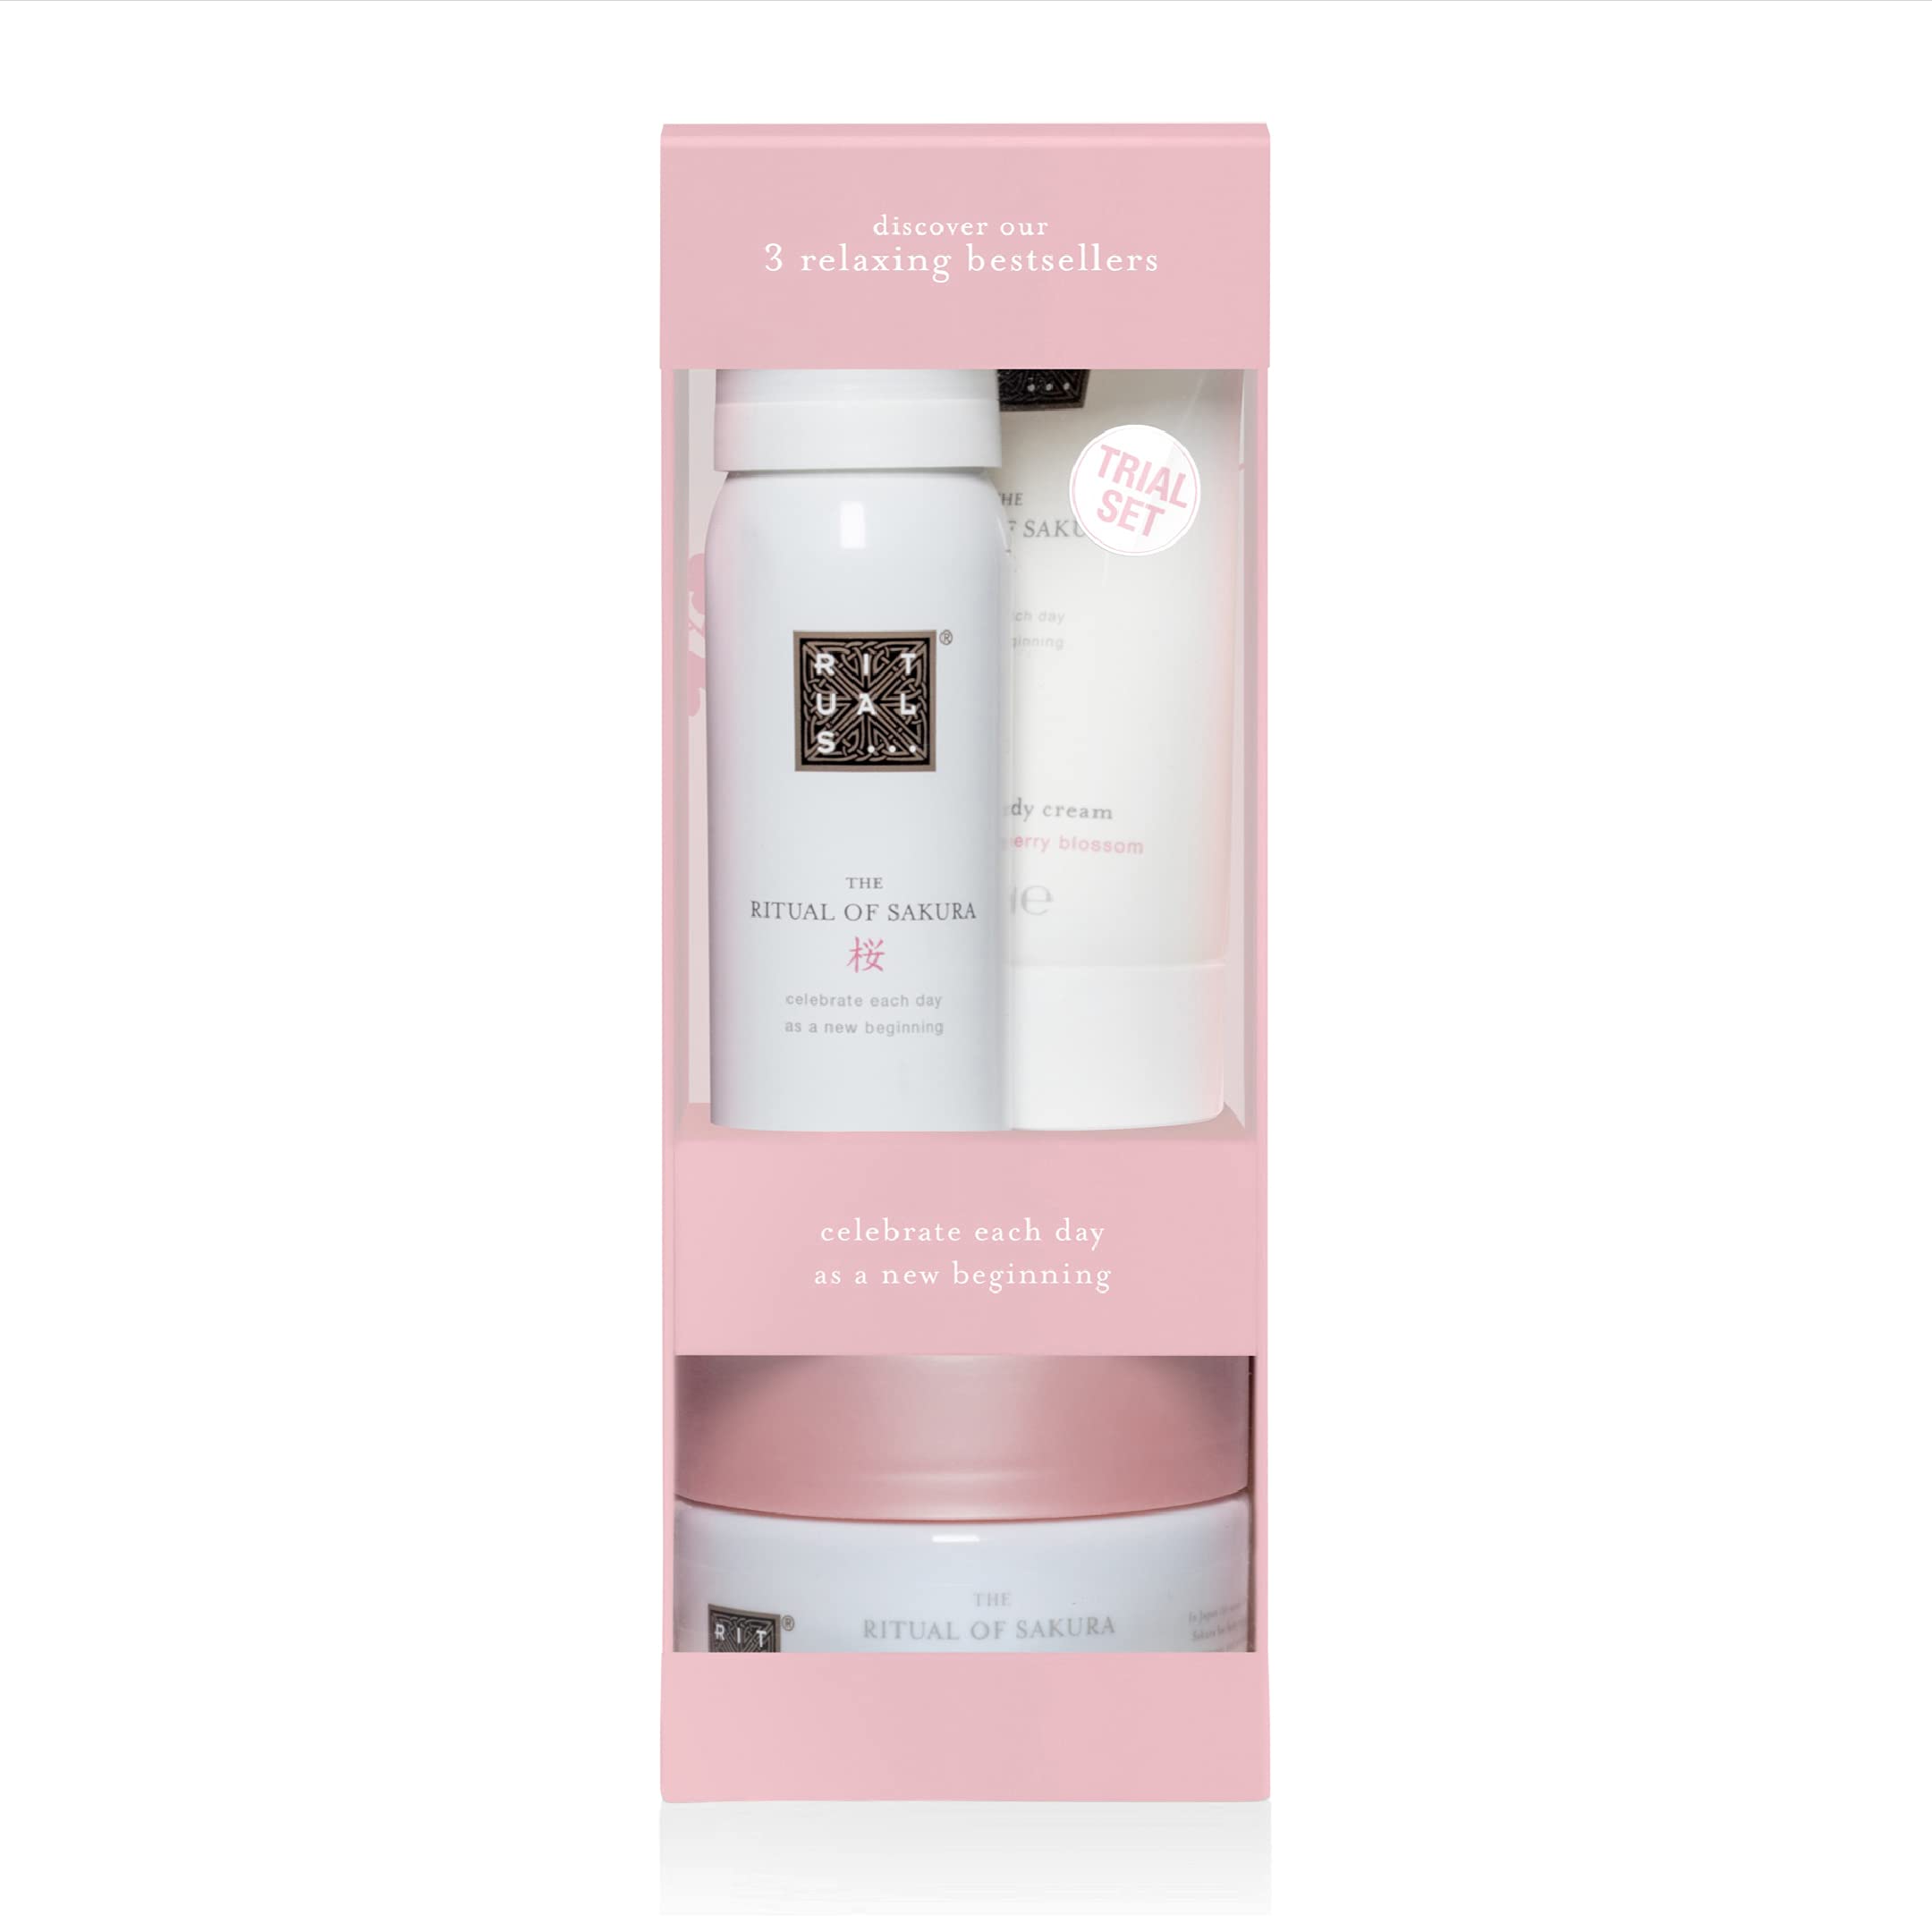 RITUALS Gift Set For Women from The Ritual of Sakura - Shower Foam, Body  Scrub, Body Cream & Candle - With Rice Milk & Cherry Blossom - Medium, 2021  : : Beauty